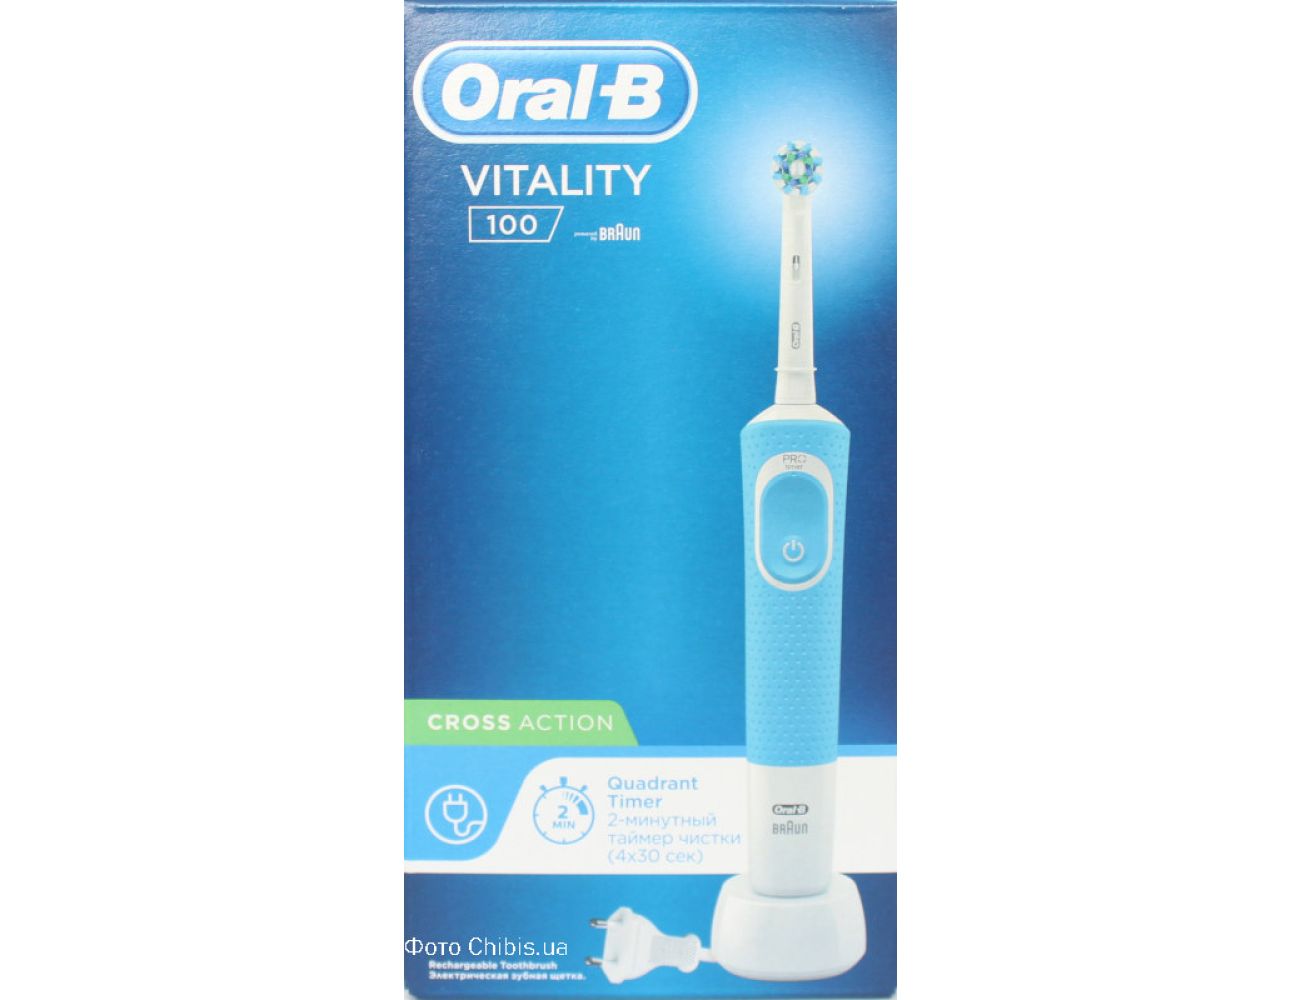 Электрическая щетка Oral B Braun Vitality D100.413.1 PRO CrossAction тип 3710 Blue